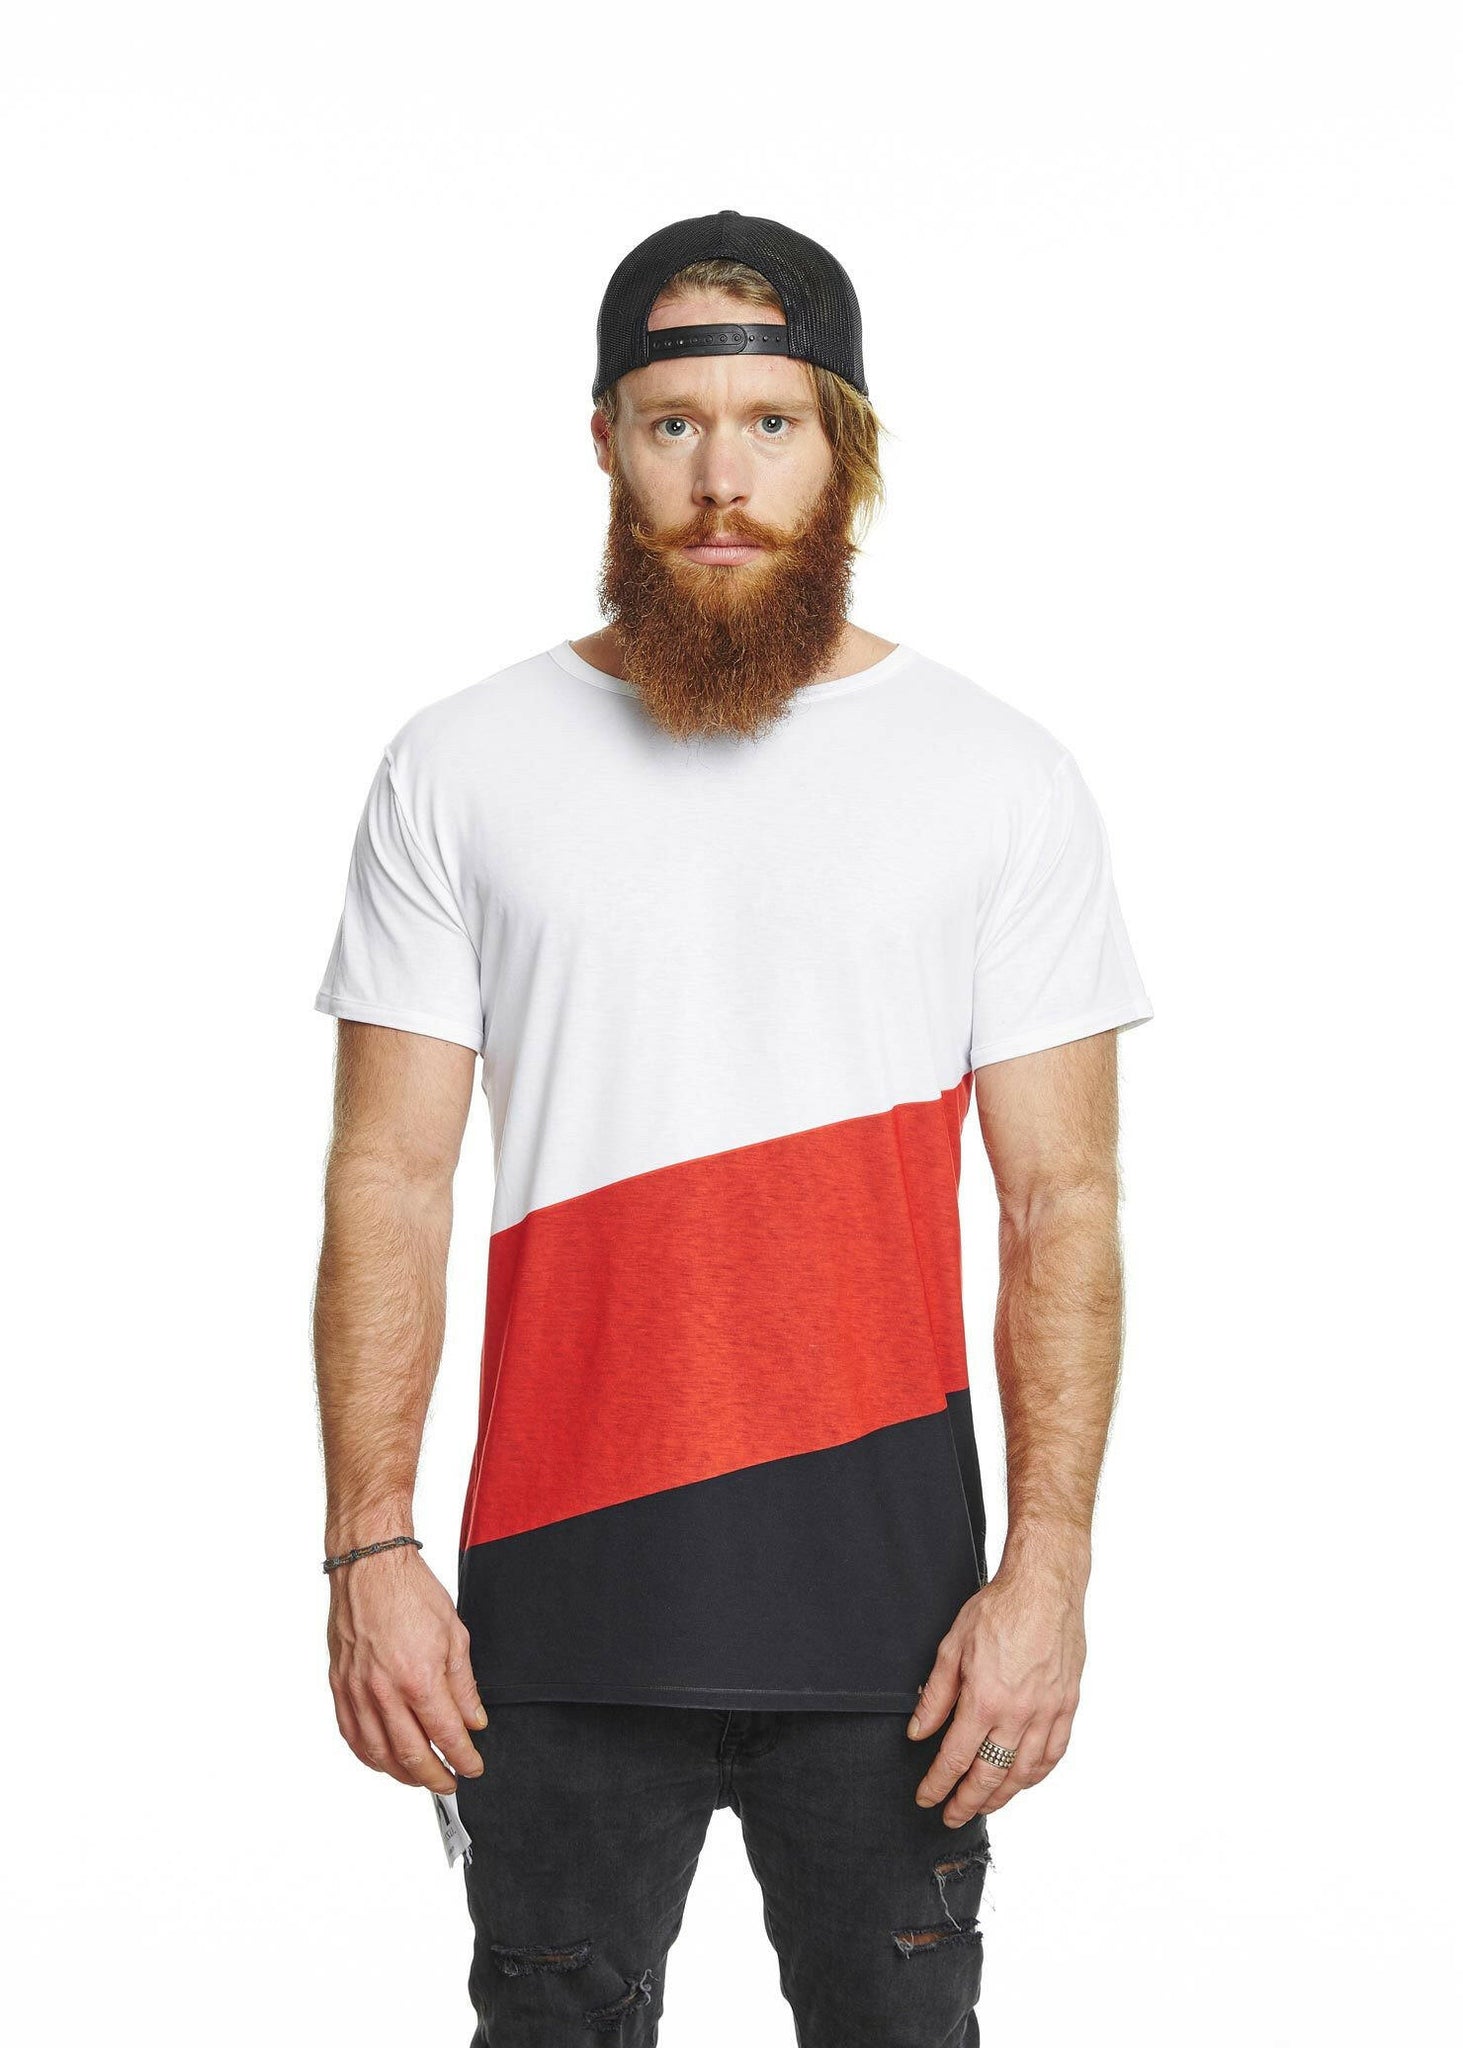 Fool - Uztzu Clothing - Shop Super 4 in 1 T-shirts, Pants and hoodies online!